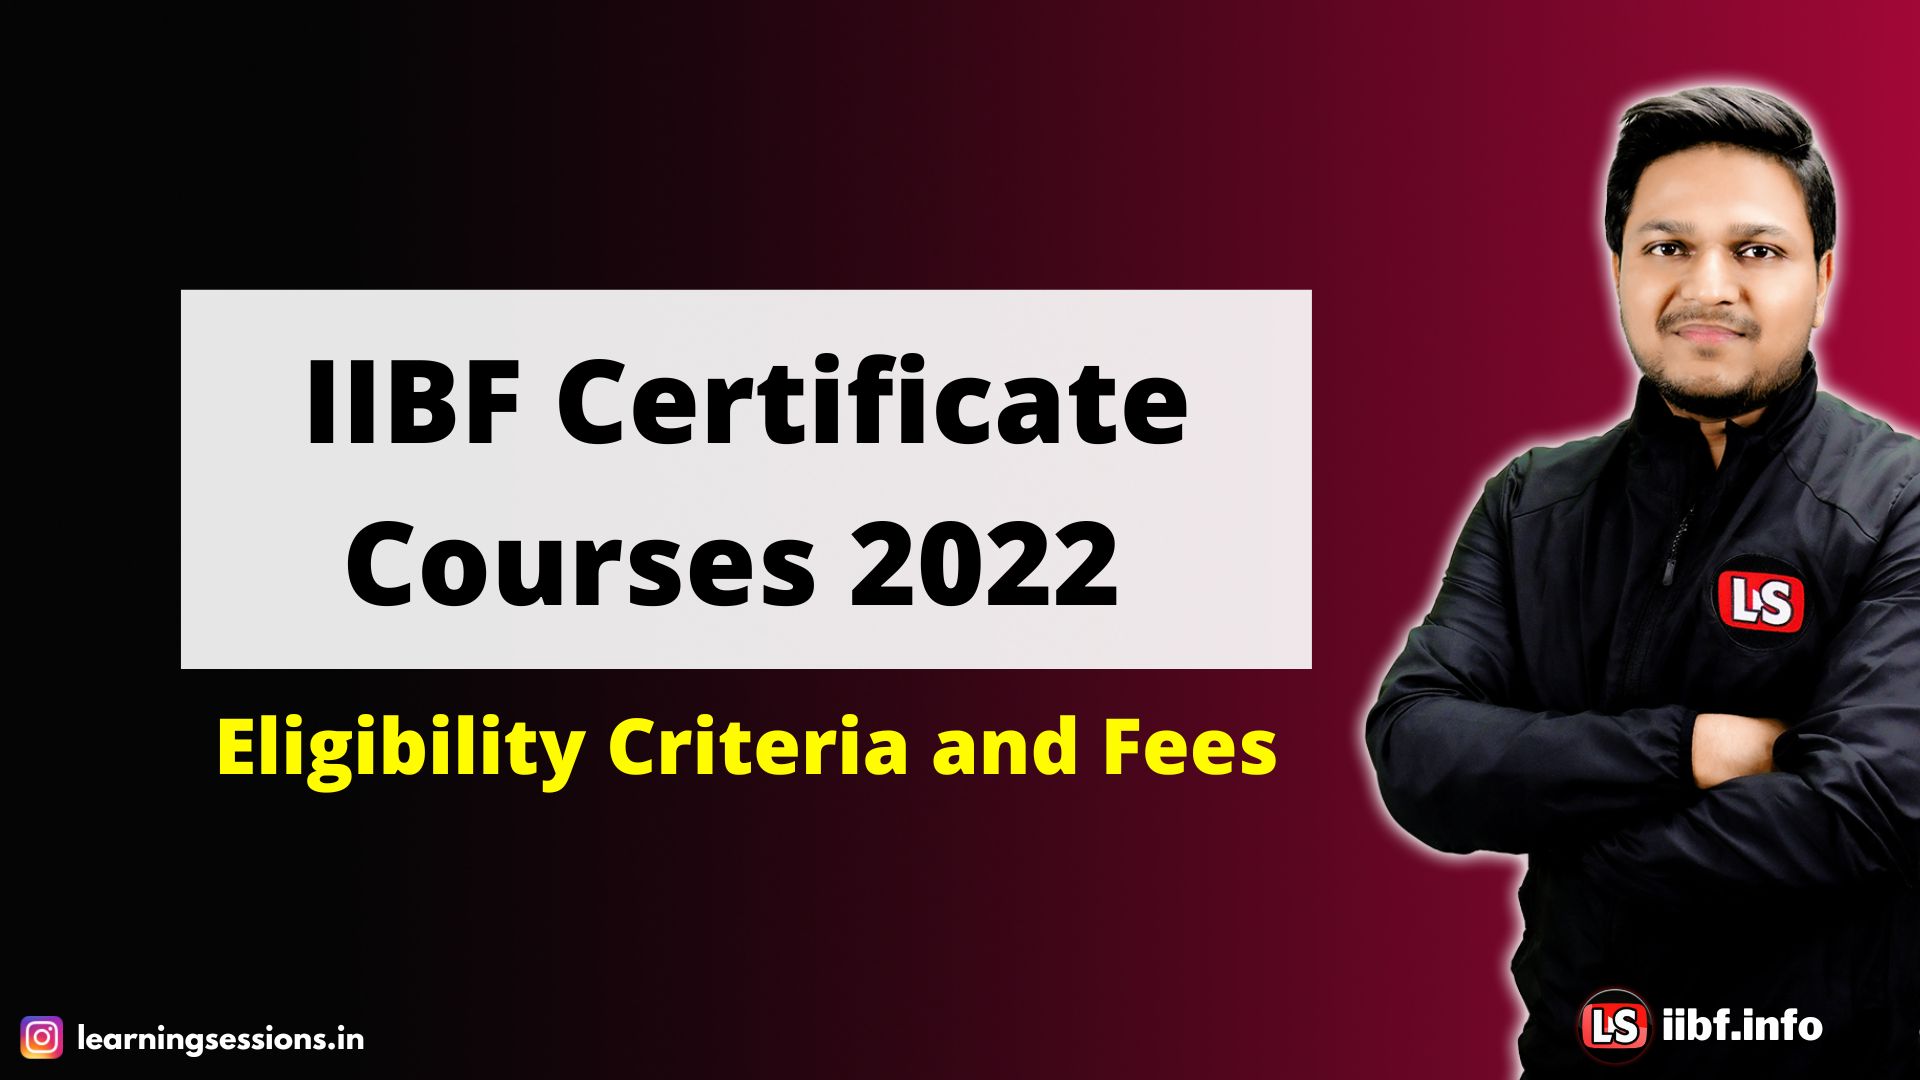 IIBF Certificate Courses 2022 | Eligibility Criteria and Fees